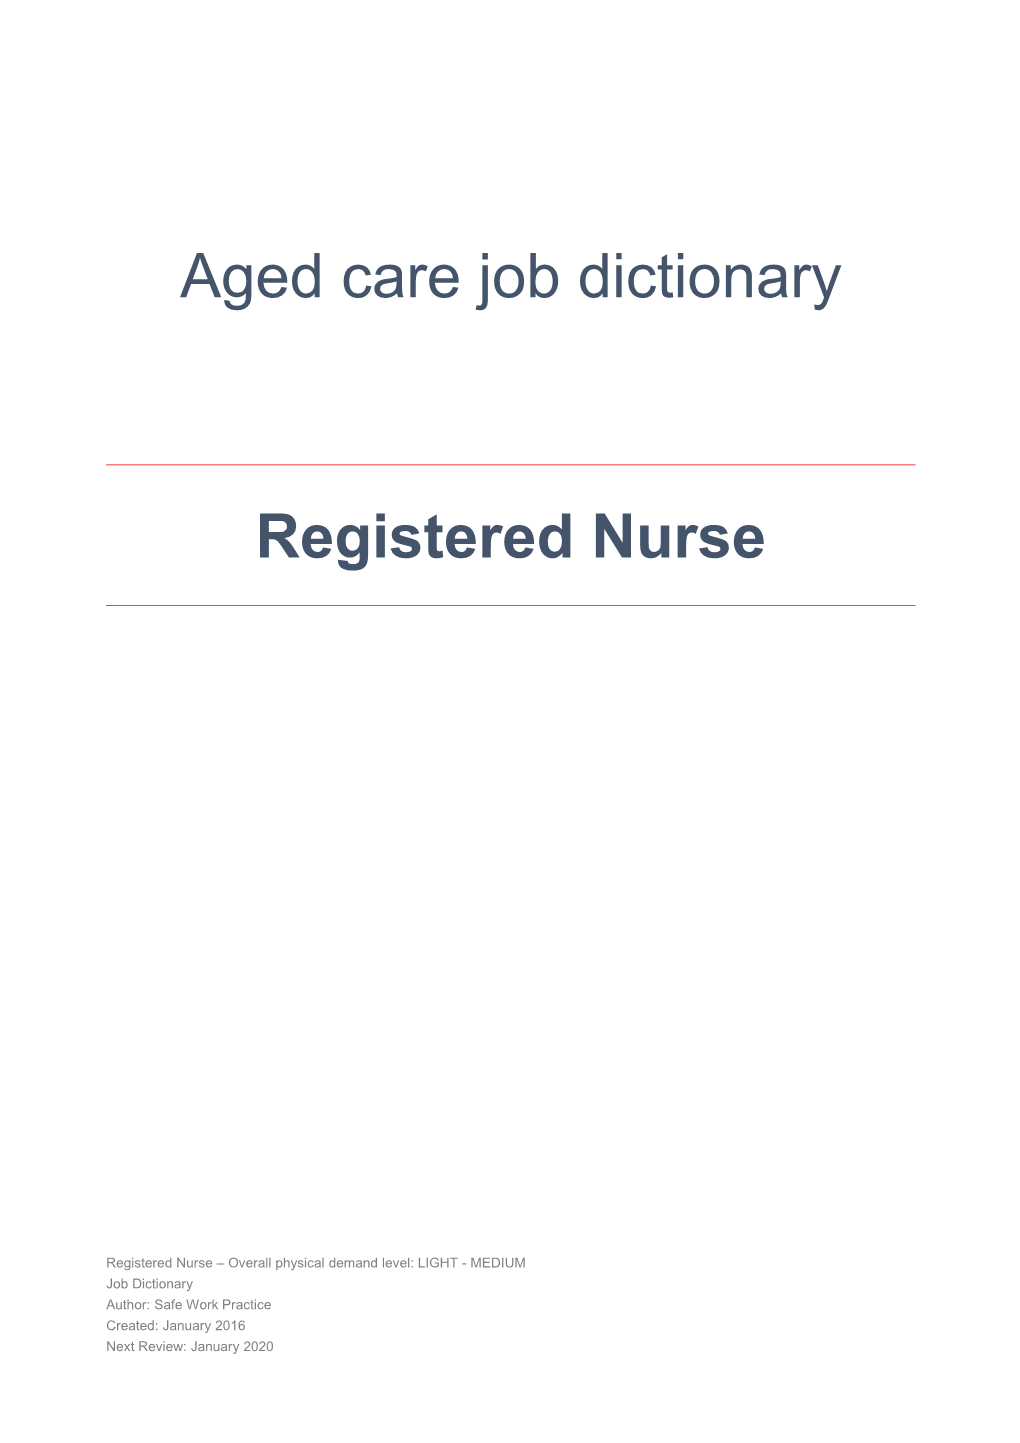 Aged Care - Registered Nurse - All Tasks